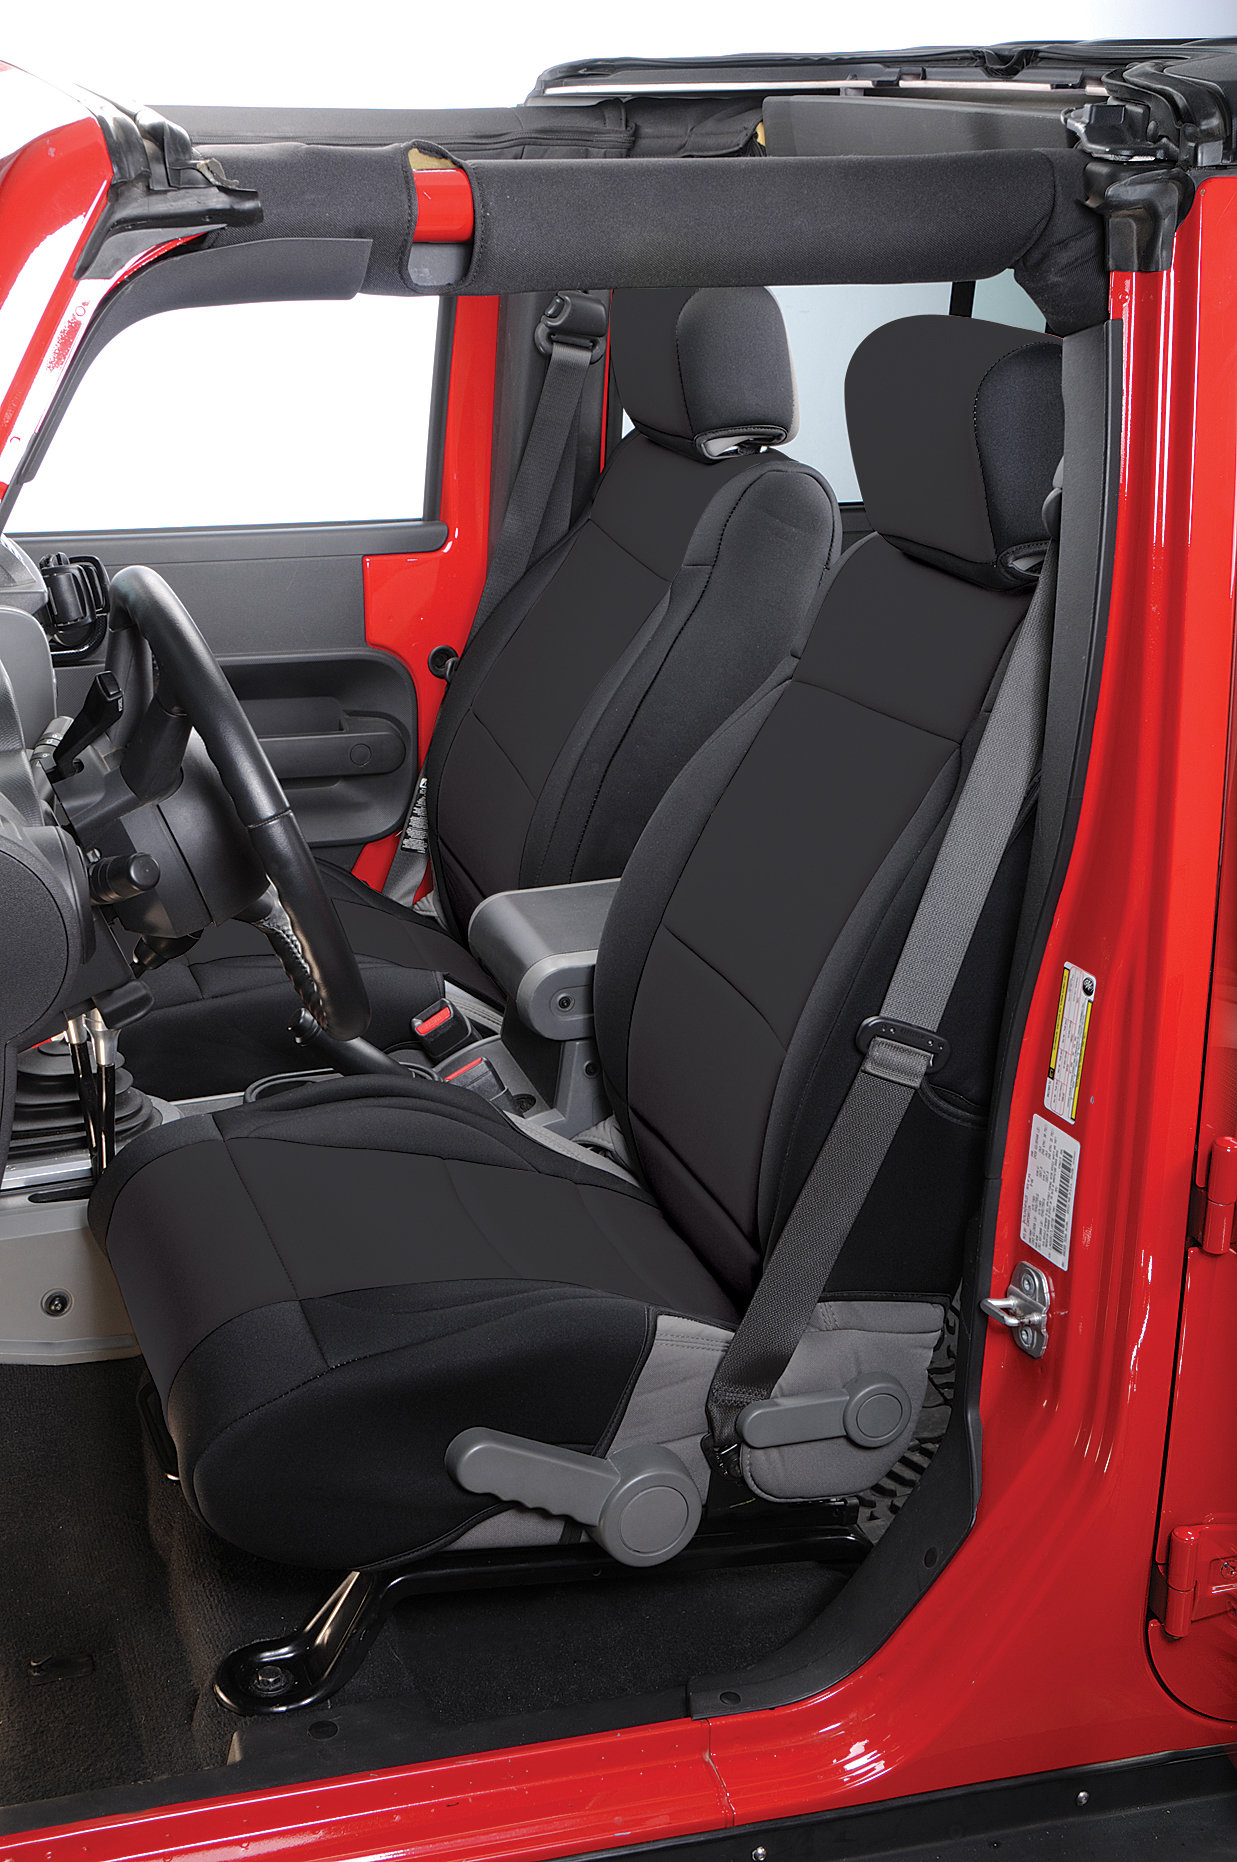 Jeep Neoprene Front Seat Covers; Black/Gray Wrangler Rugged Ridge 13214.09 JK